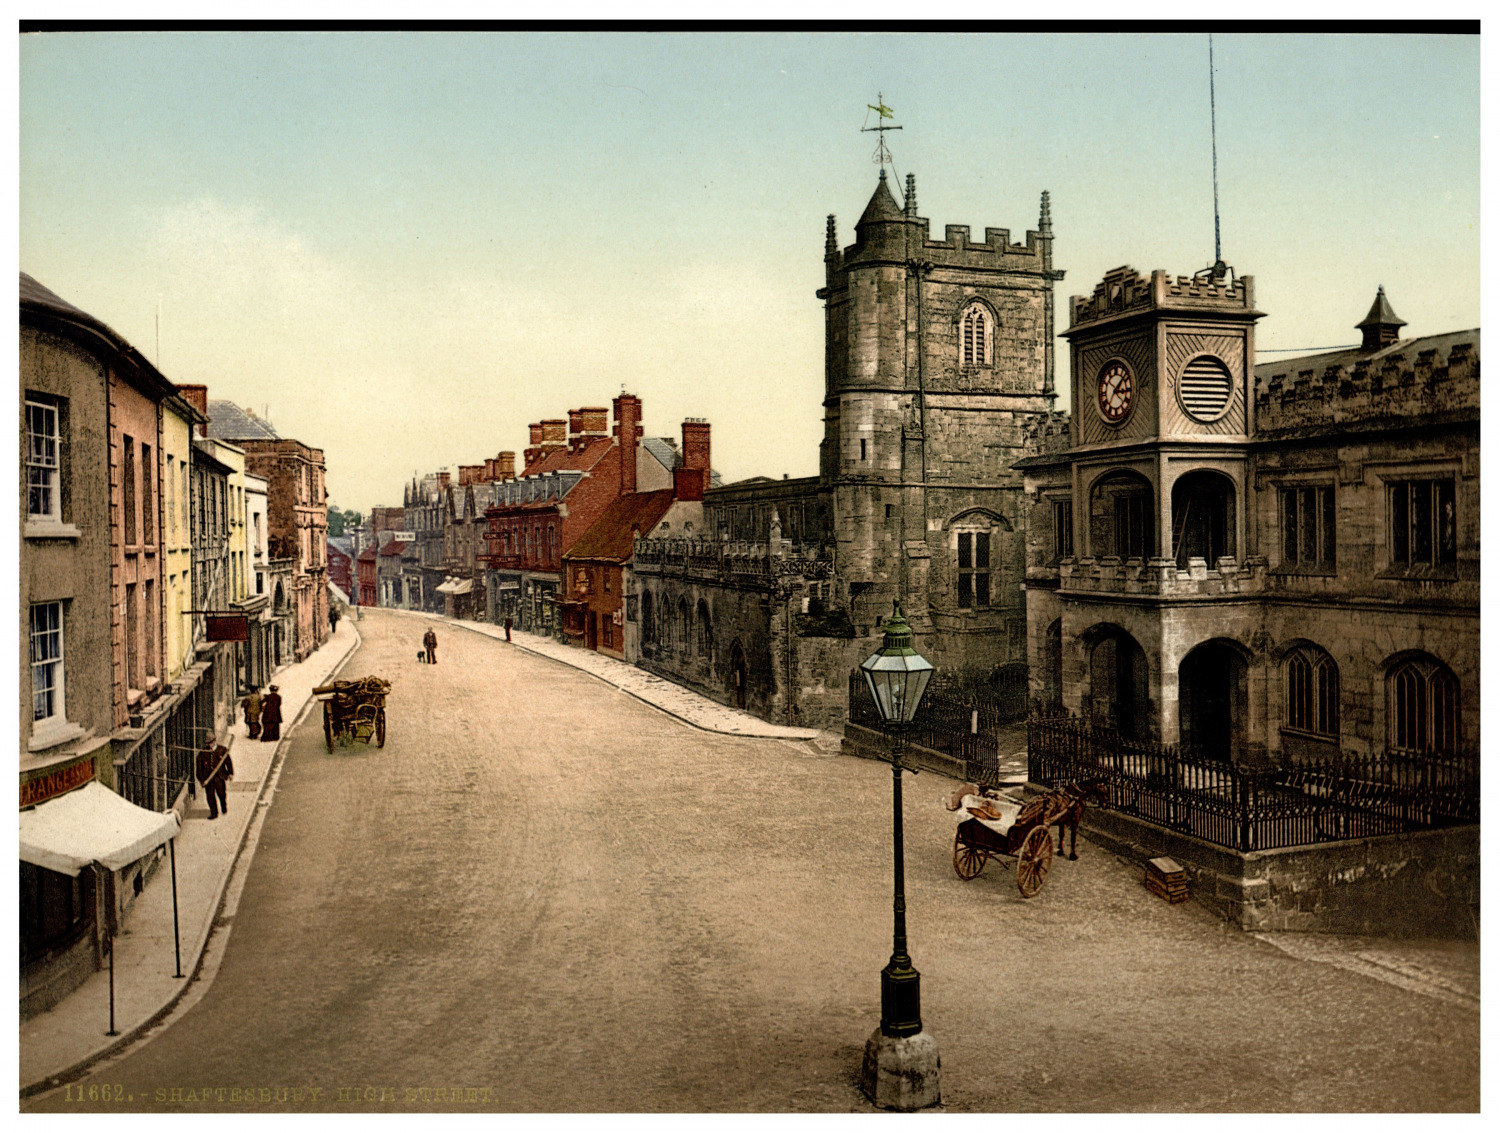 England. Shaftesbury. High Street. Vintage Photochrome by P.Z, Photochrome Zuri